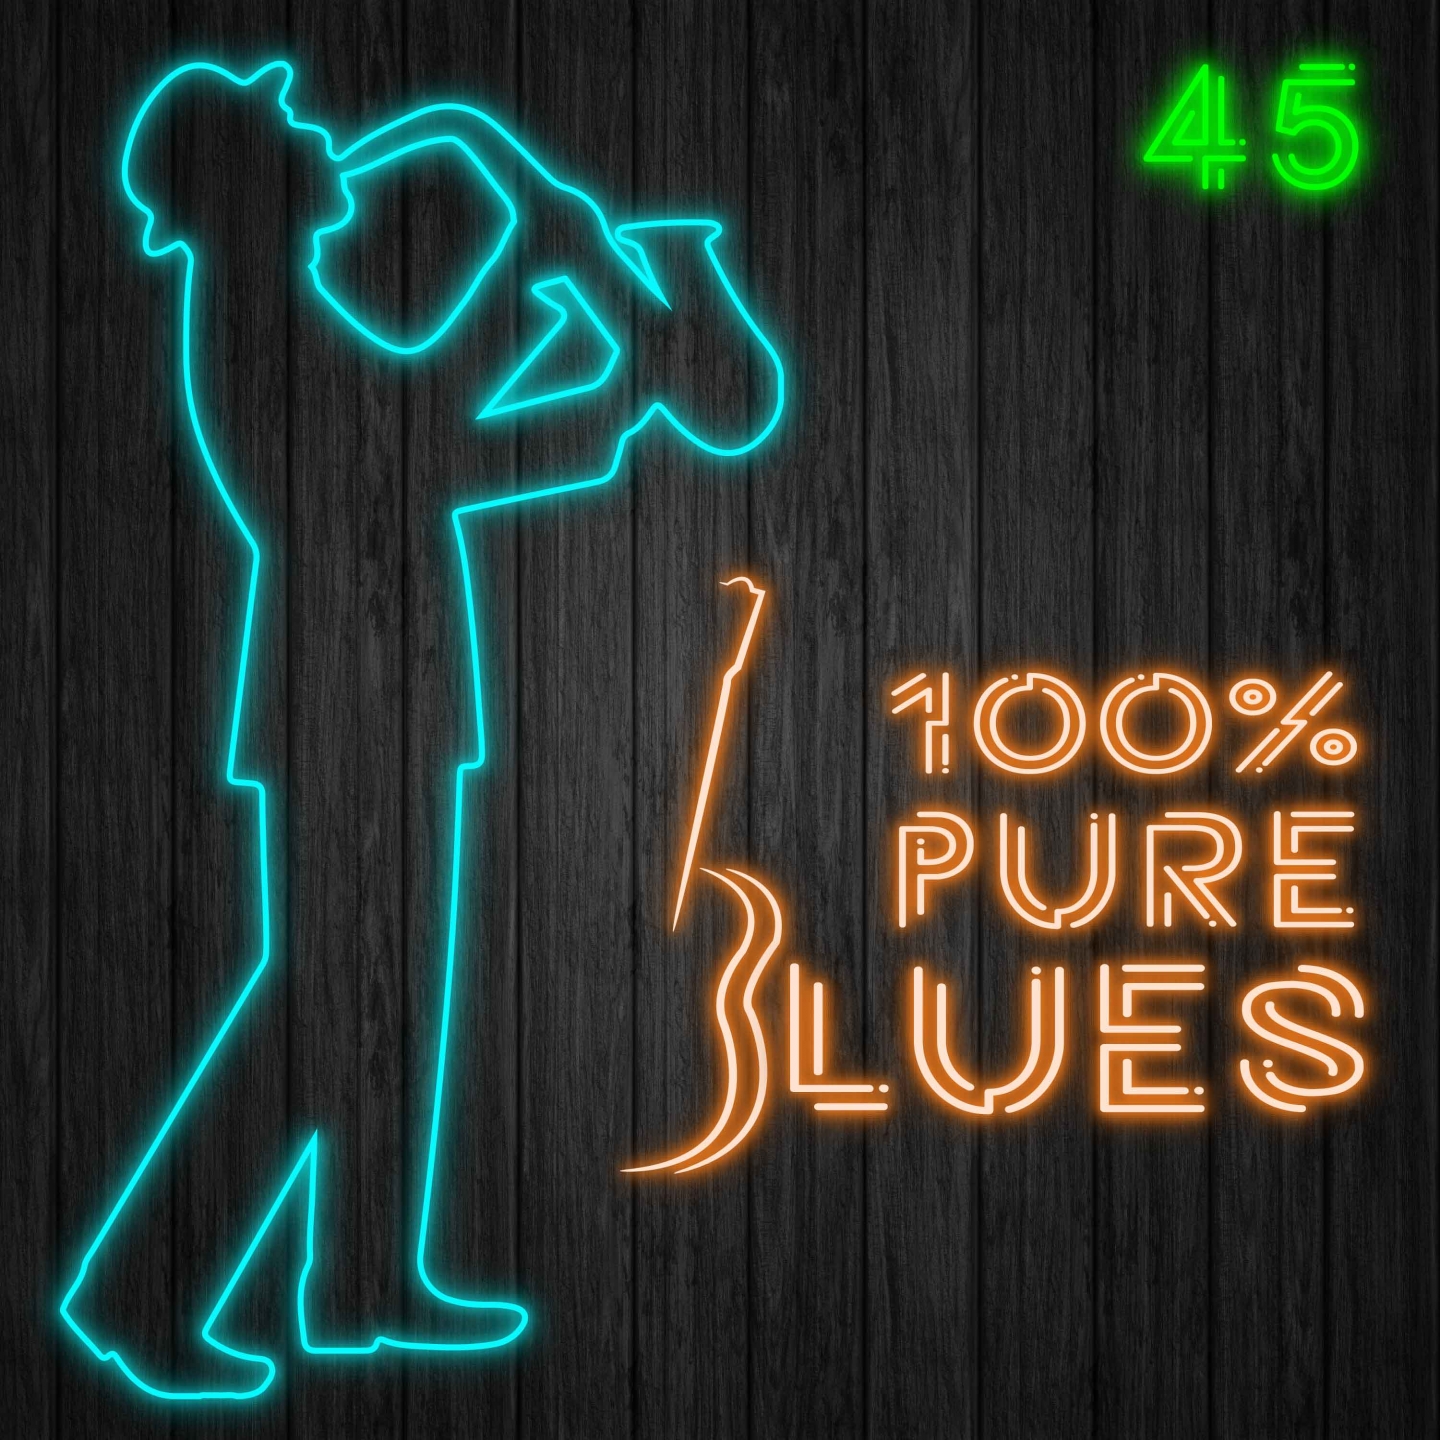 100% Pure Blues / 45